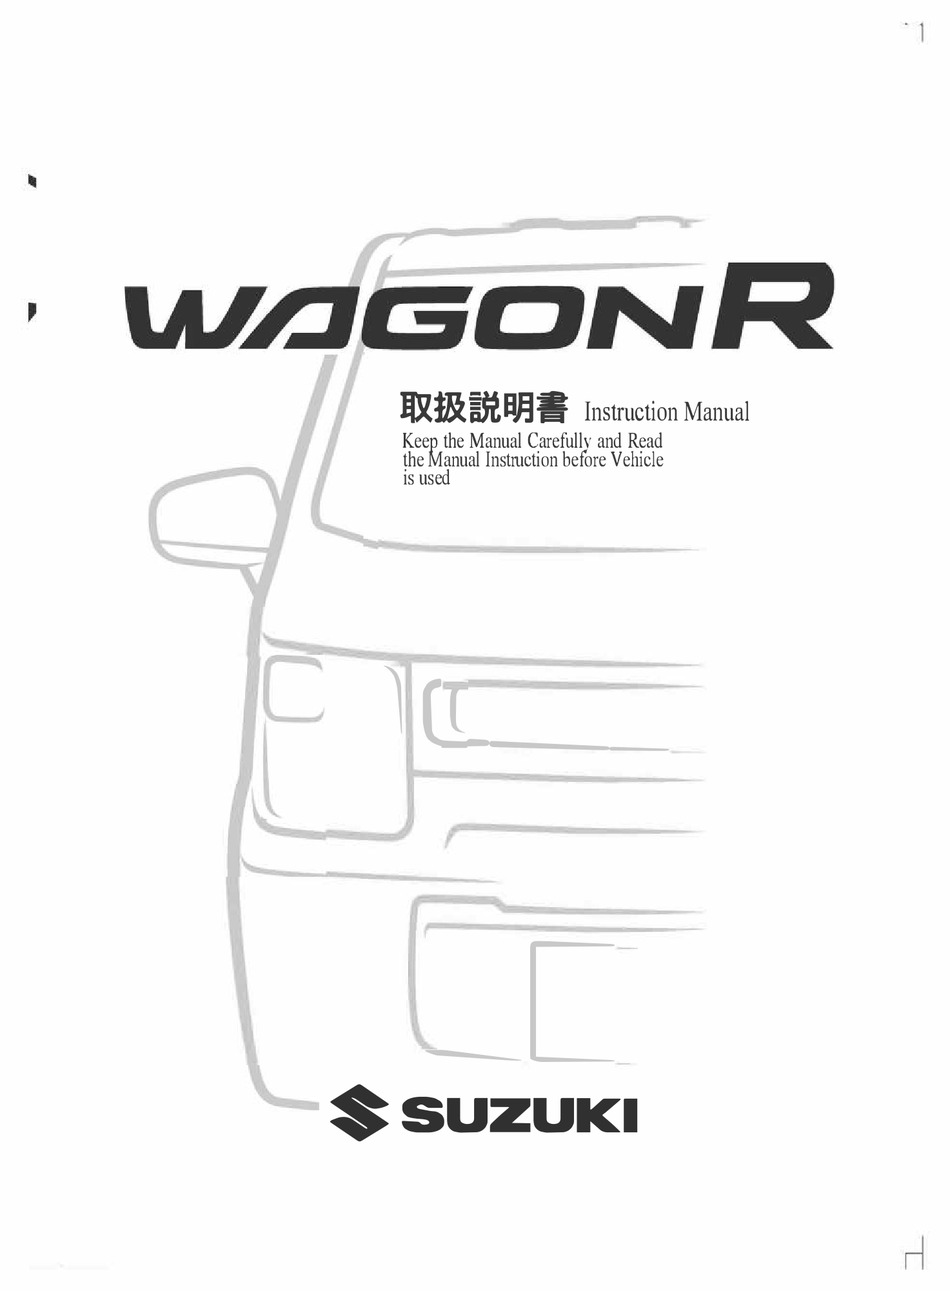 SUZUKI WAGON R INSTRUCTION MANUAL Pdf Download ManualsLib